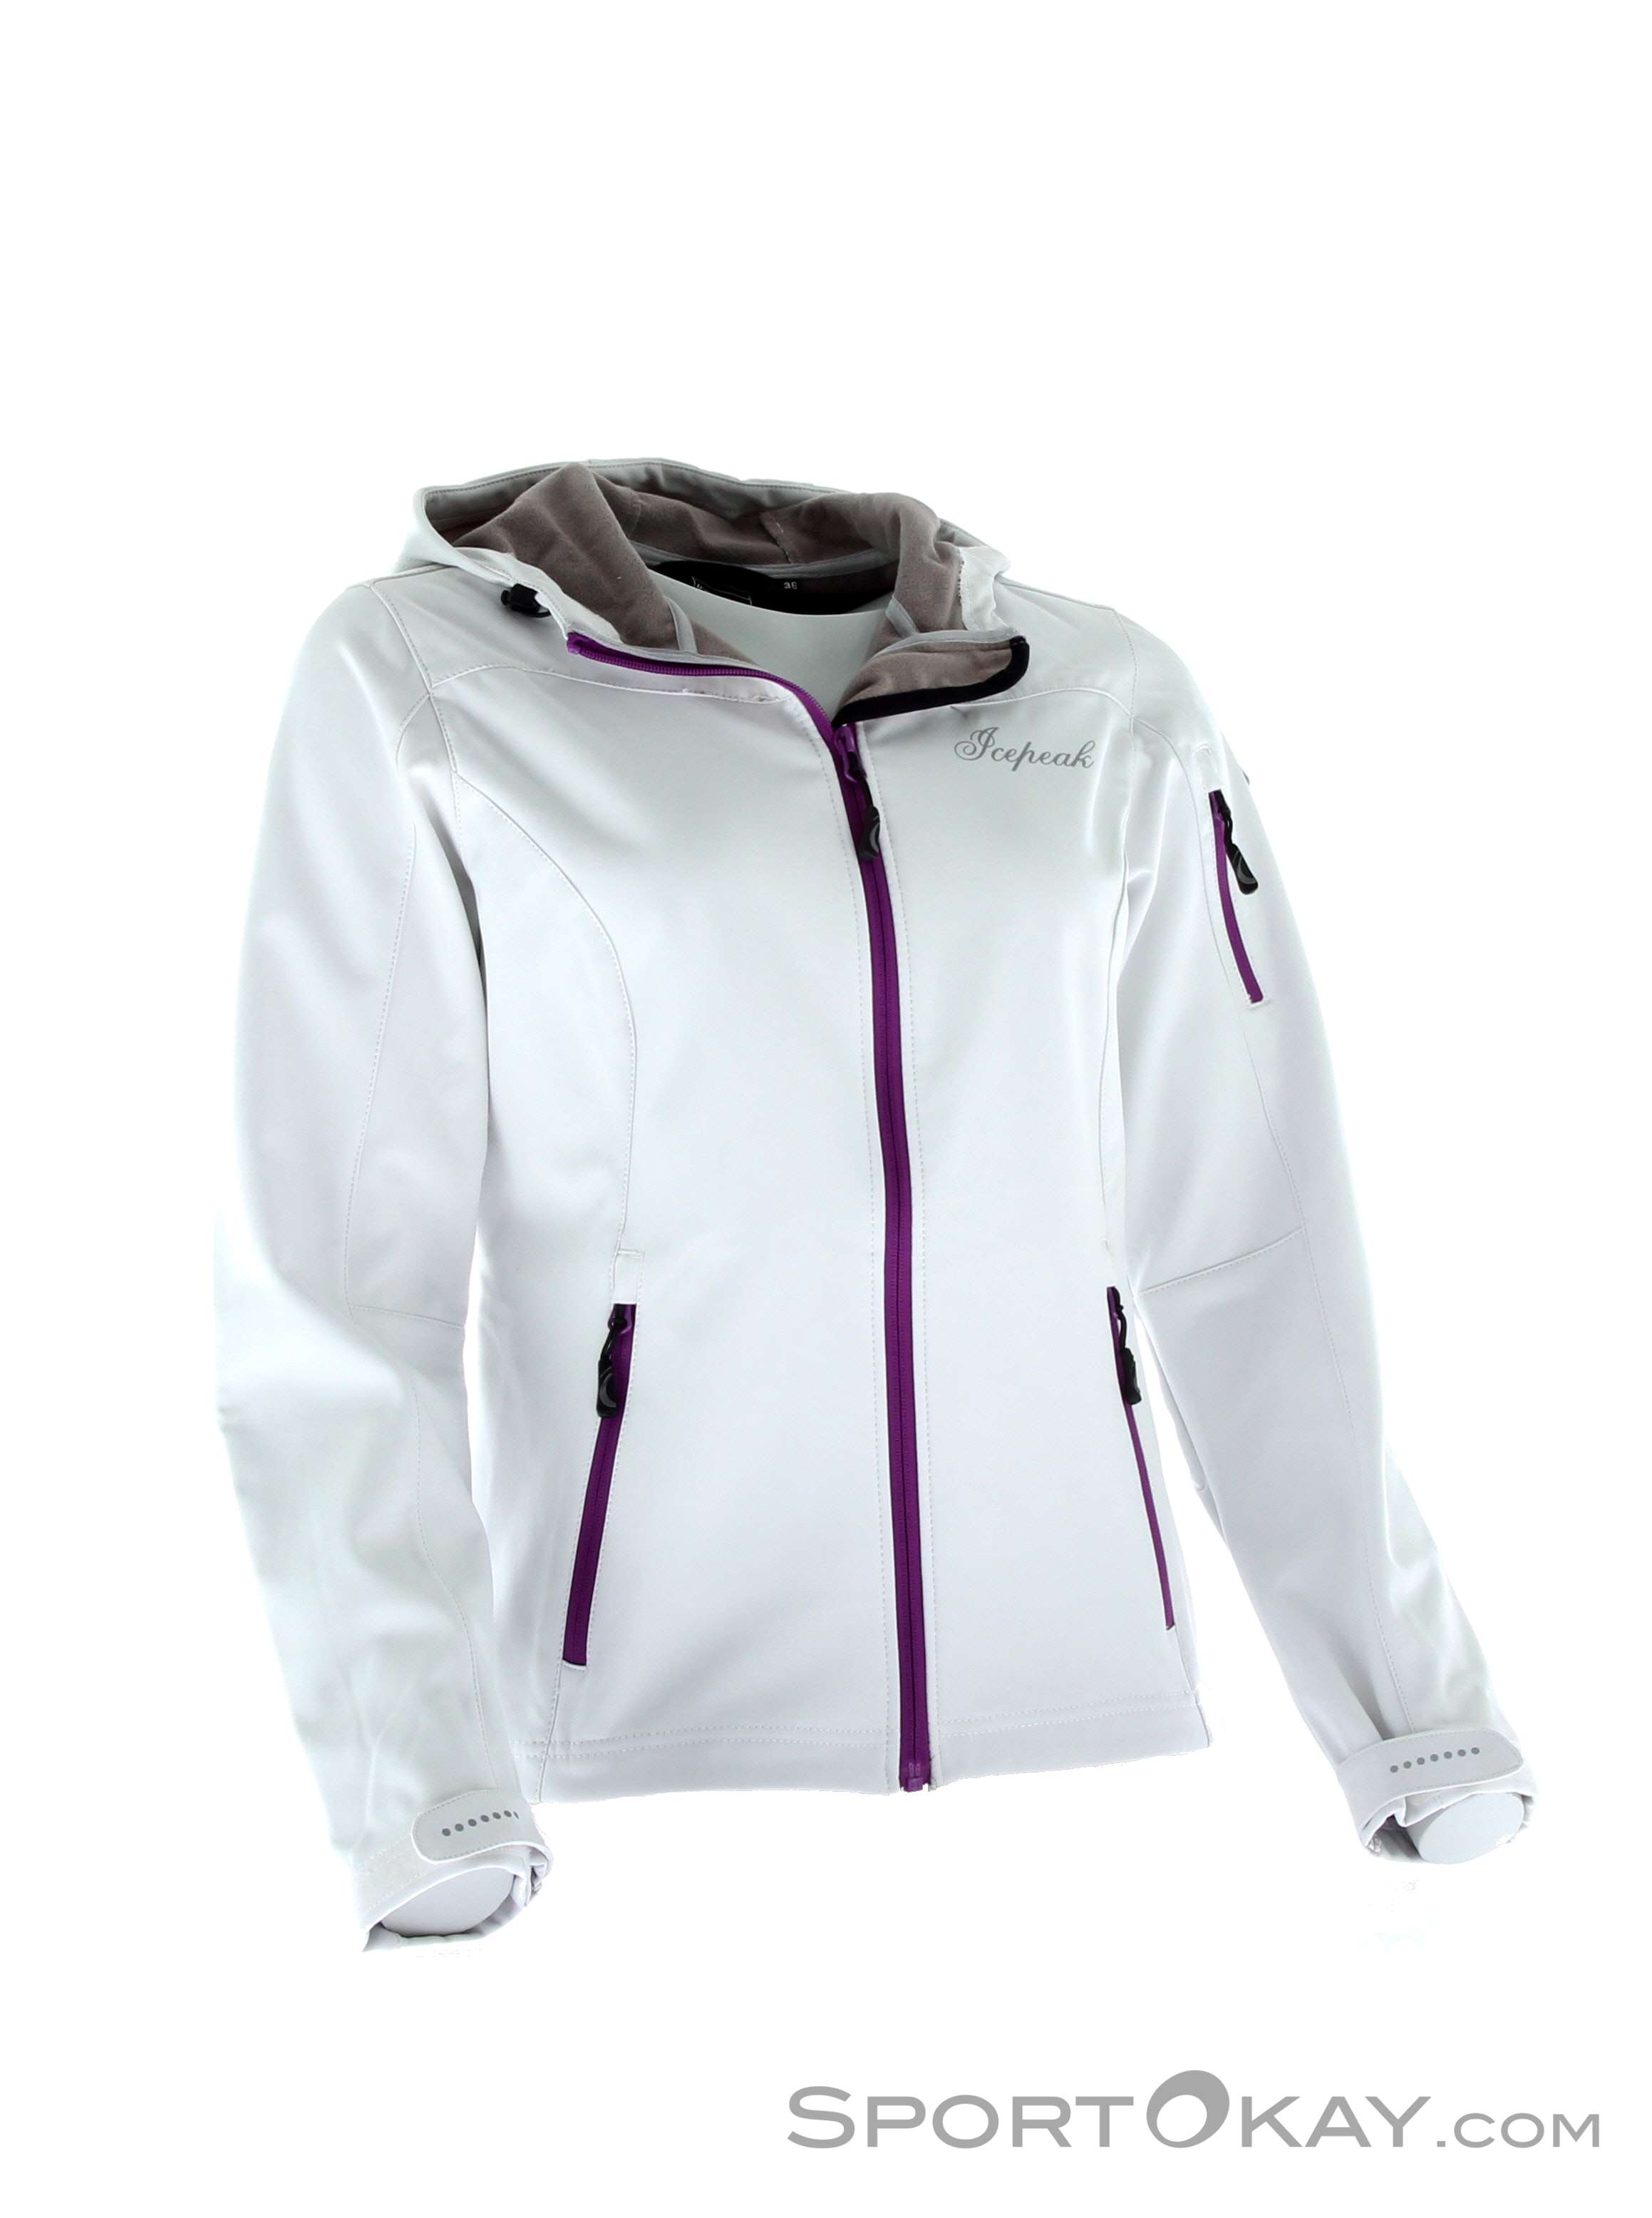 Icepeak Pirke Outdoorjacke Softshell Jackets - - All Clothing Outdoor Damen - - Outdoor